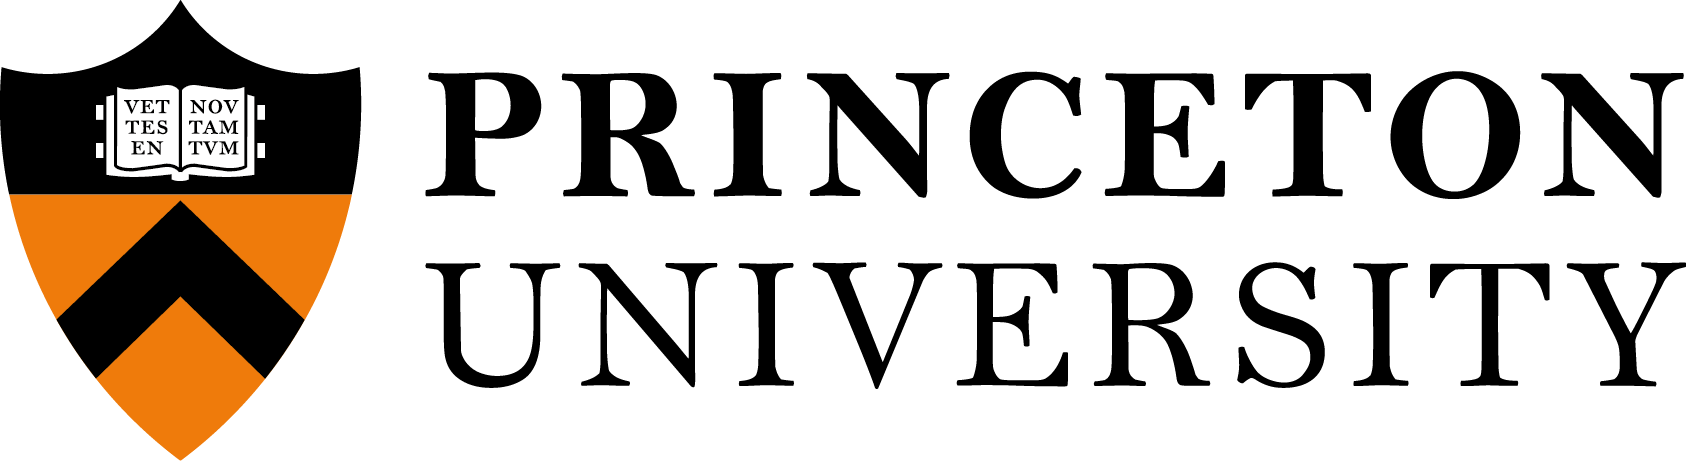 Princeton University Logo [princeton.edu] png